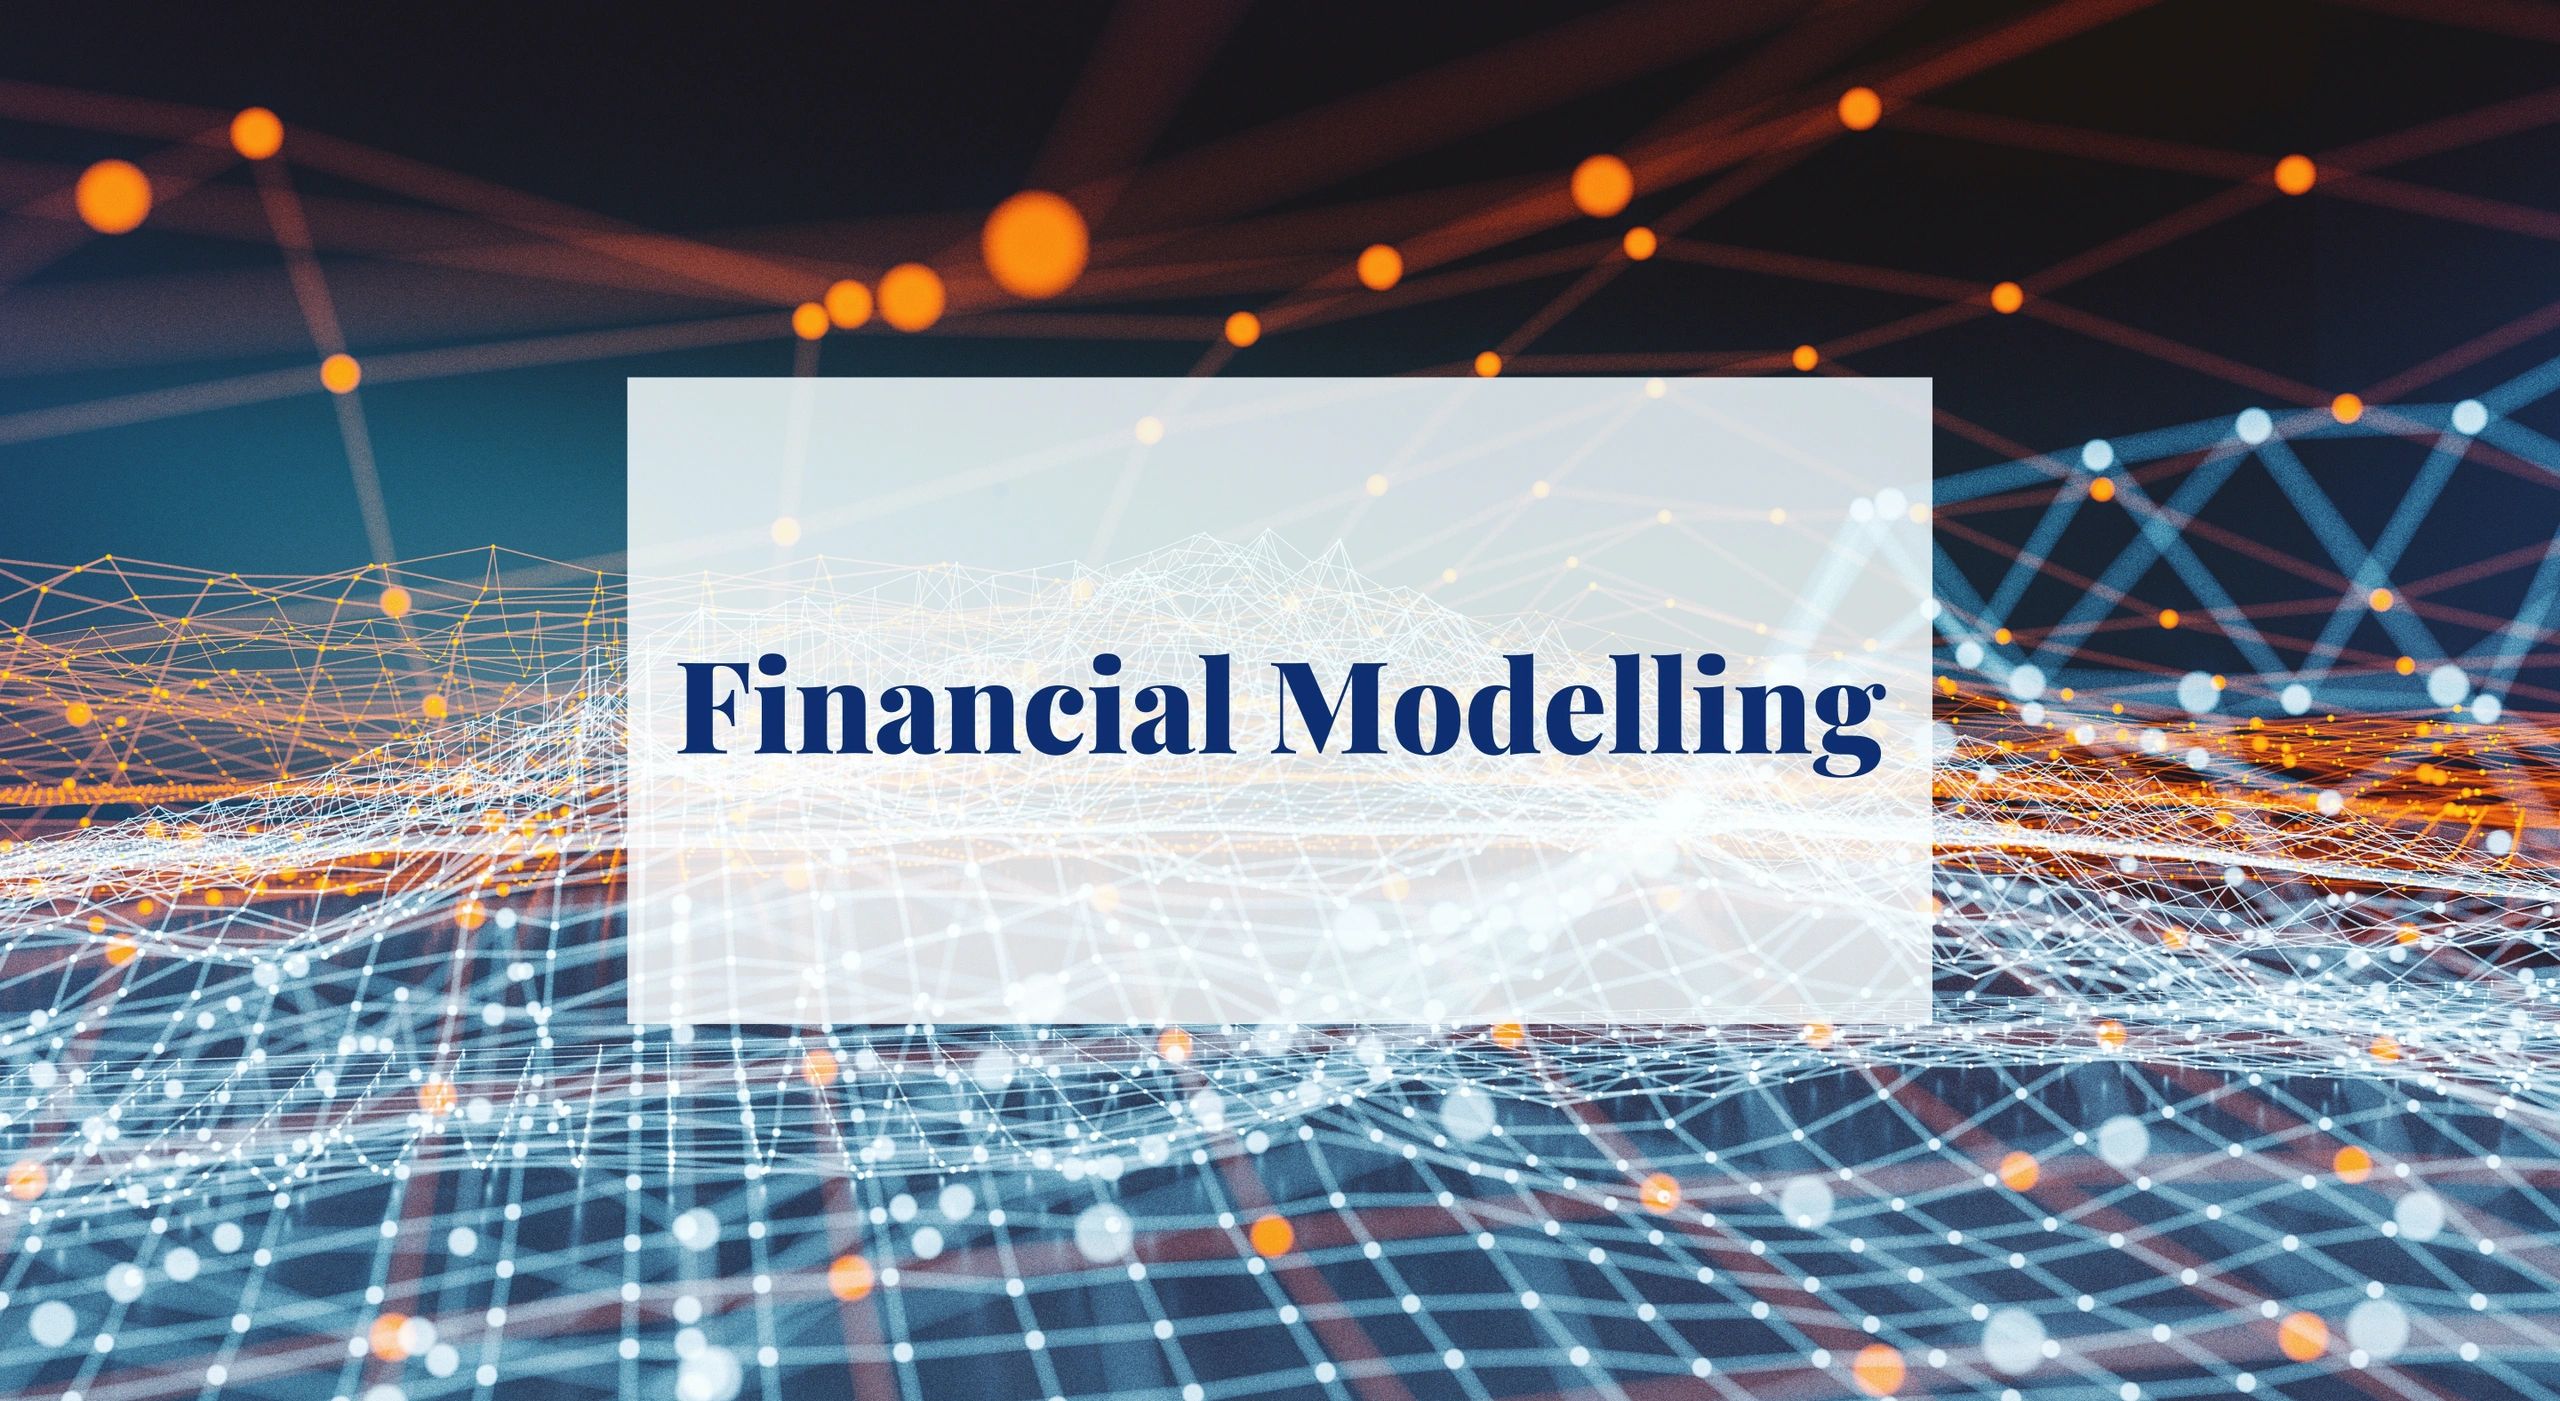 Financial modelling
Quantitative financial modelling
Financial valuation
scenario analysis